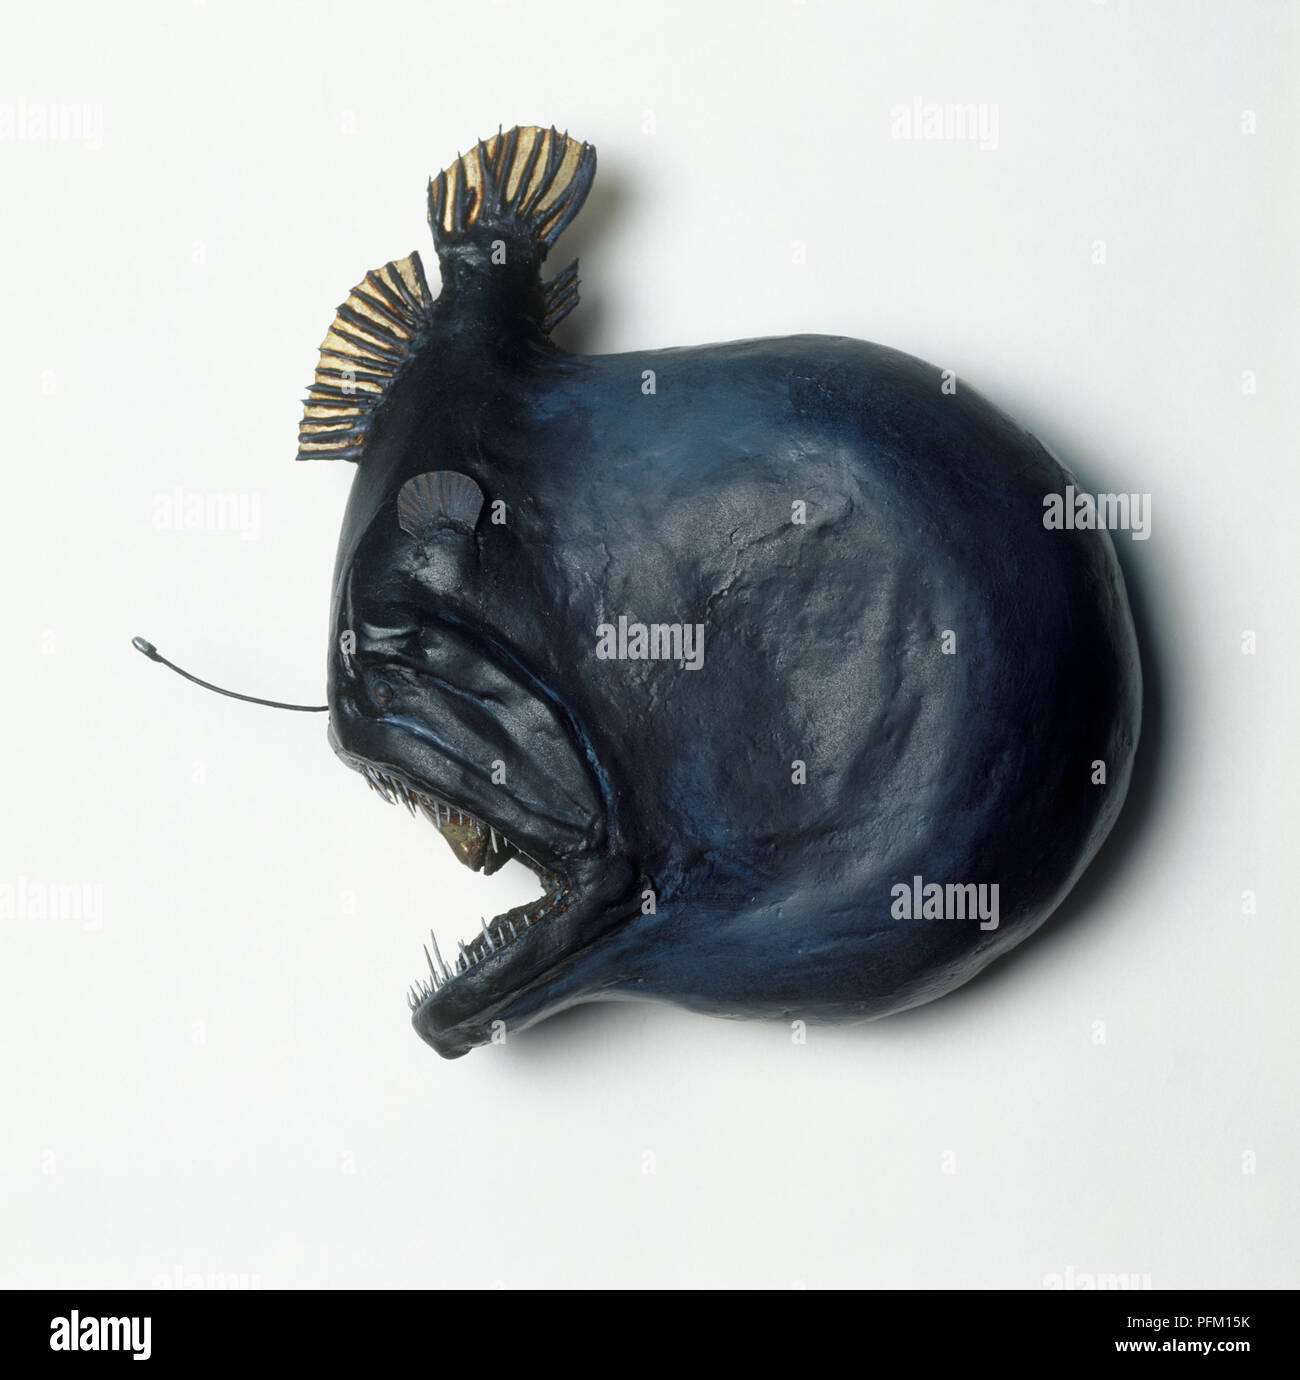 Blackdevil (Melanocetus johnsonii), model of a round black fish with ...